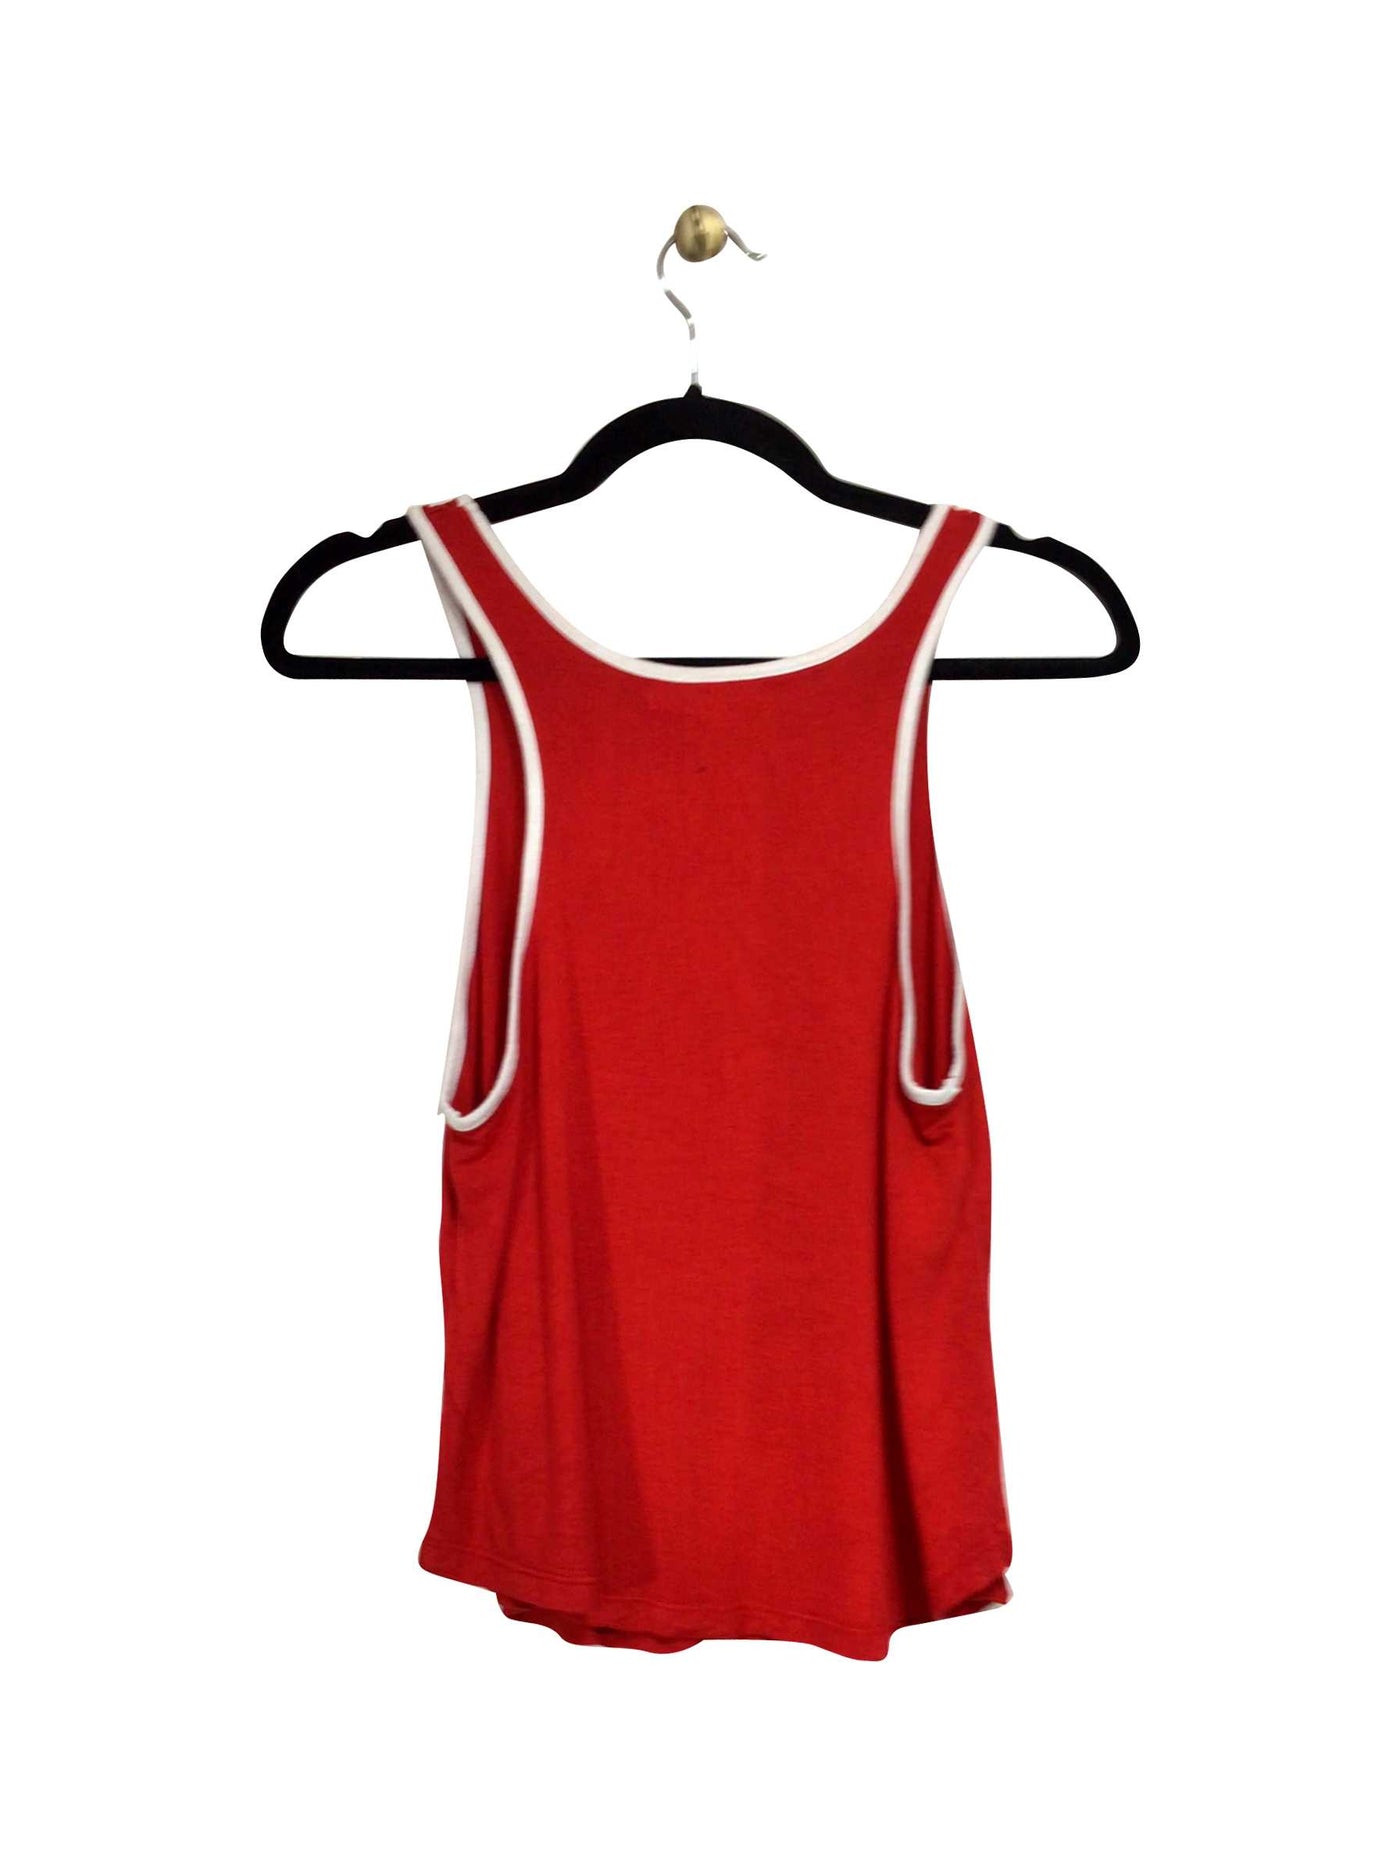 URBAN HERITAGE Regular fit T-shirt in Red - Size S | 9.99 $ KOOP